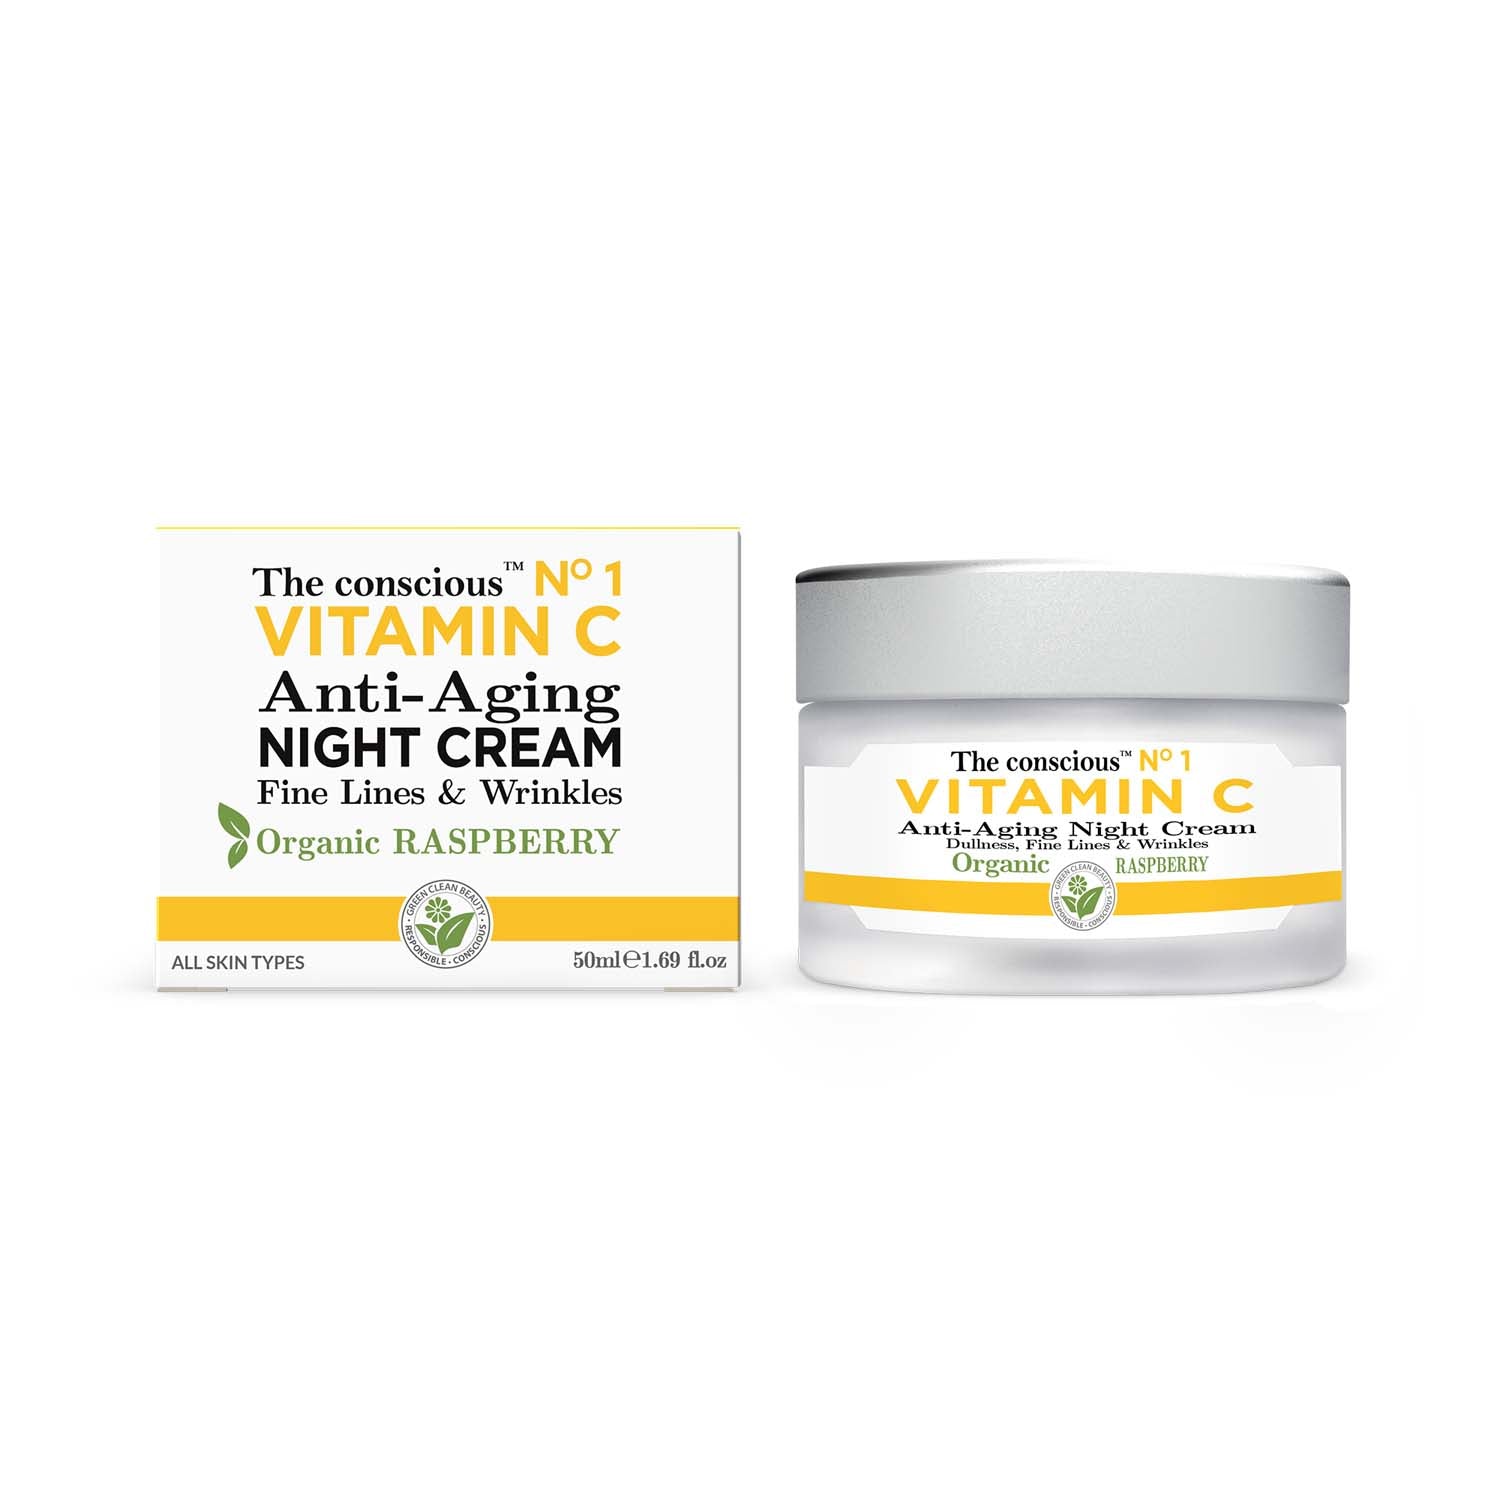 The conscious™ Vitamin C Anti-Aging Night Cream Organic Raspberry